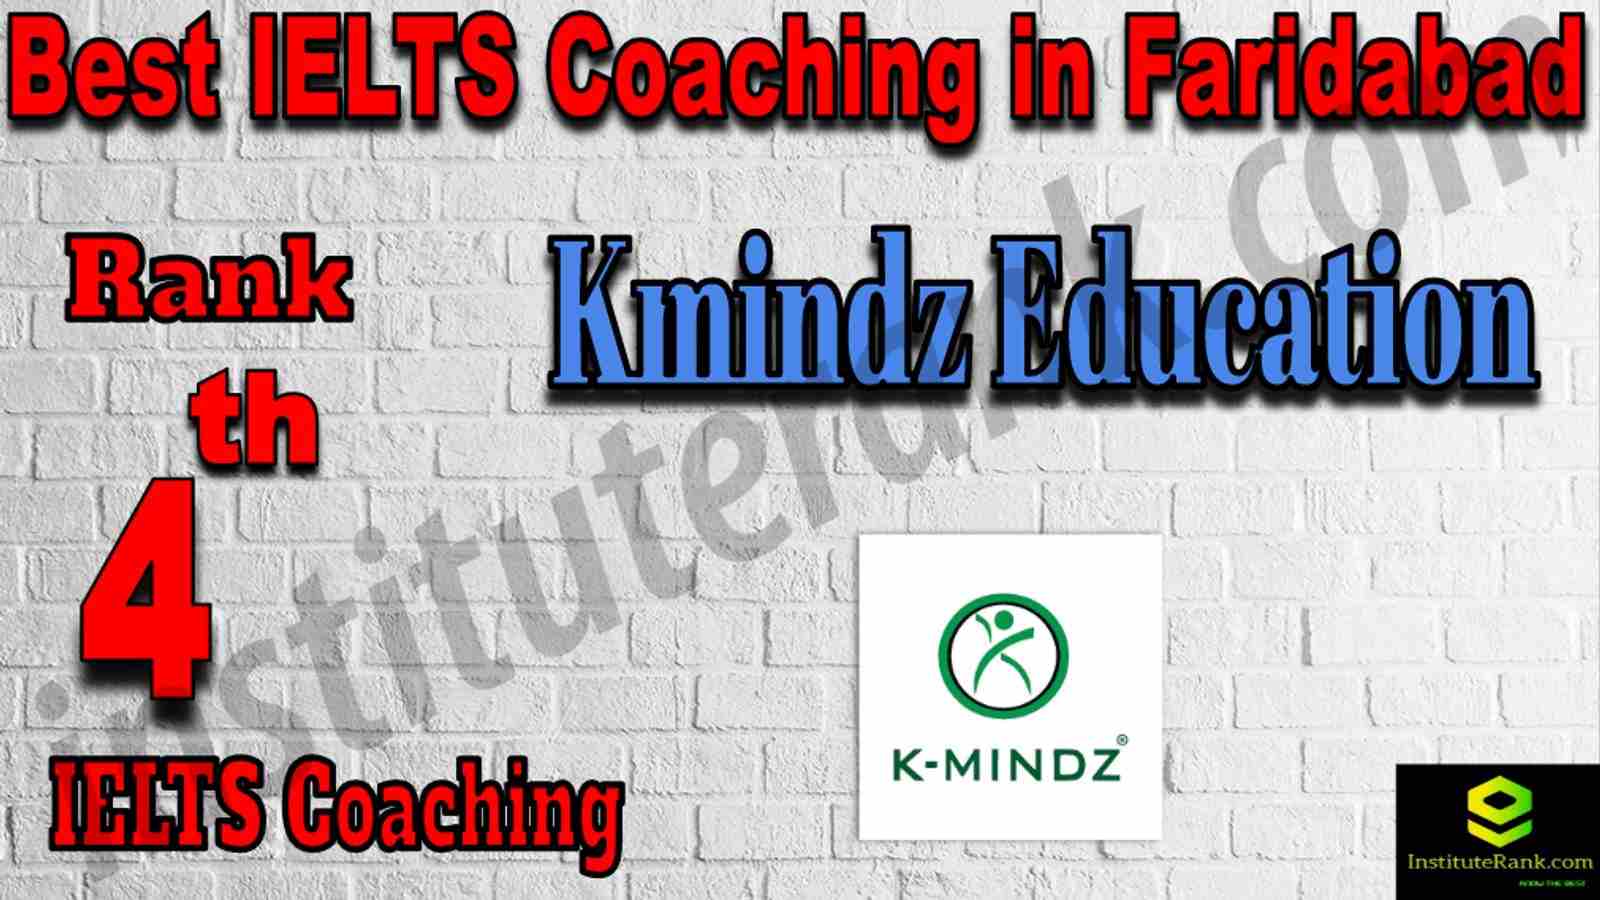 4th Best IELTS Coaching in Faridabad